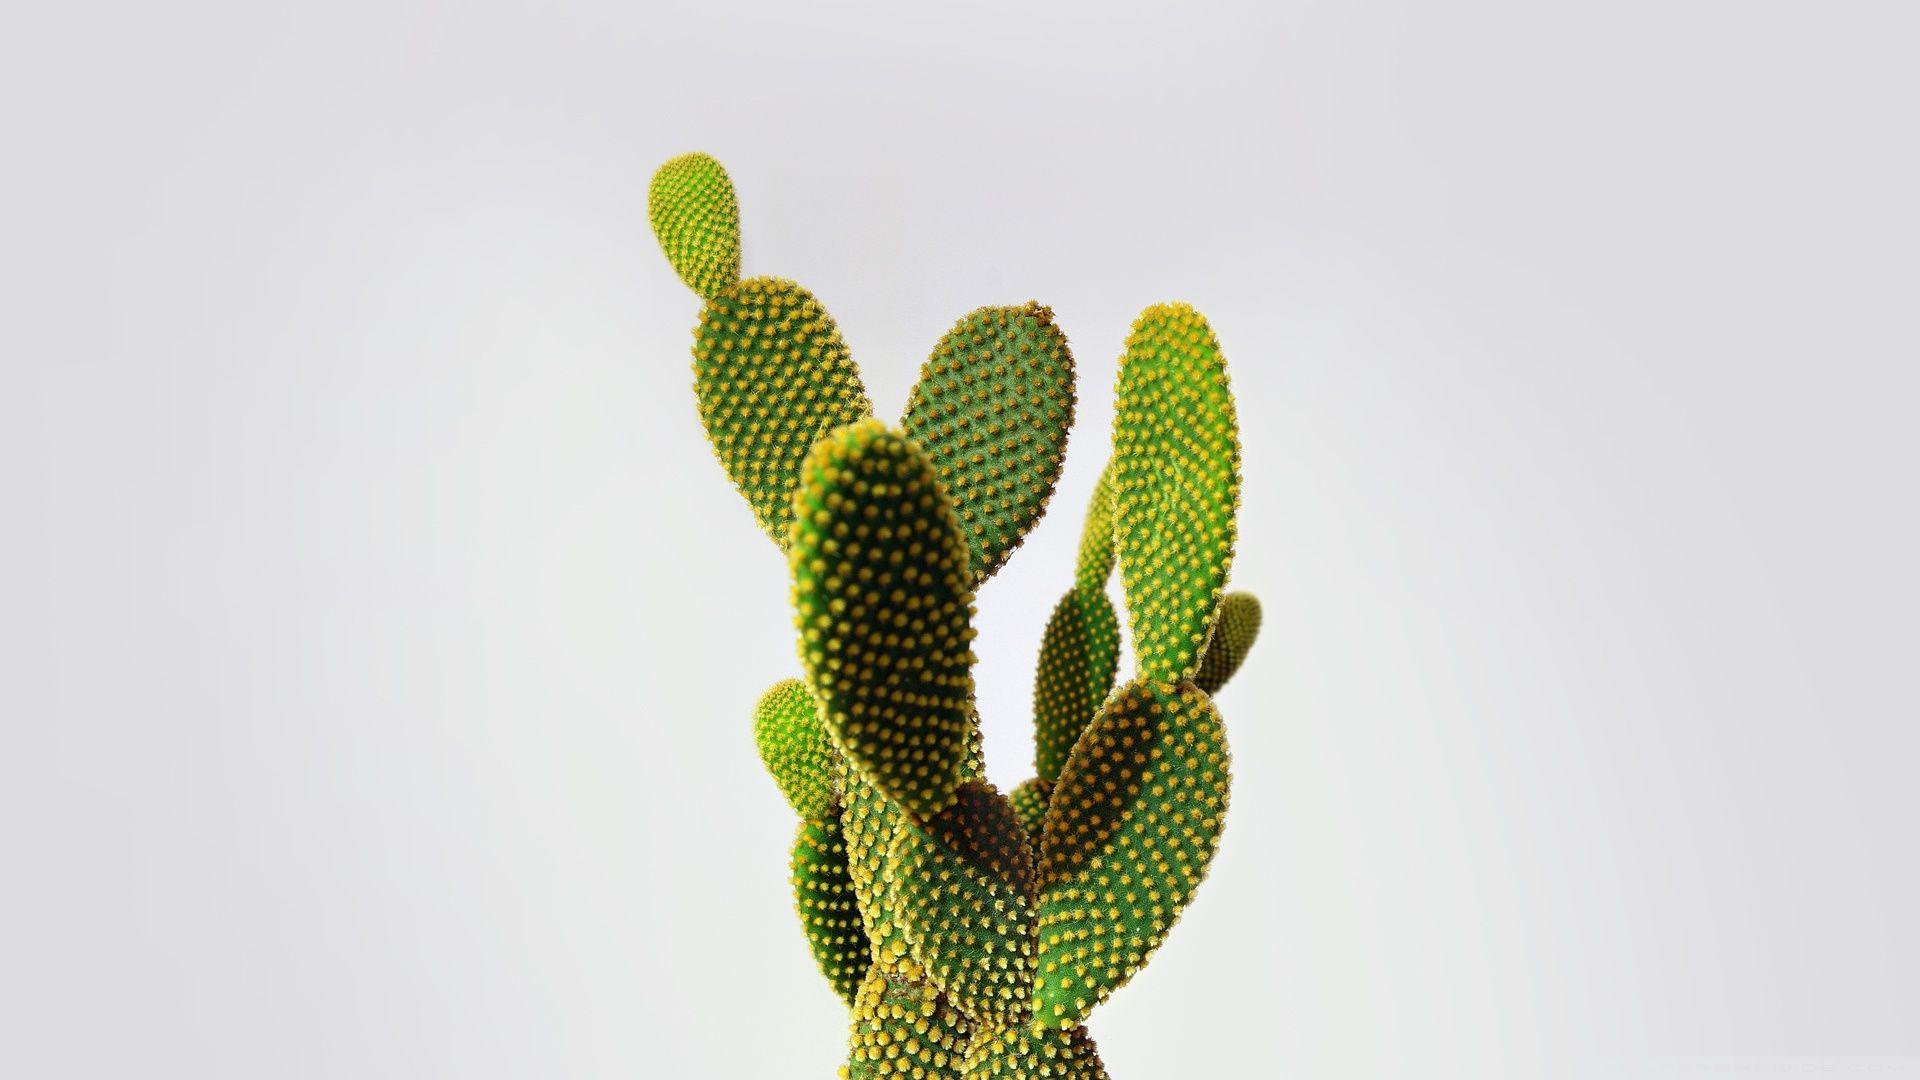 100 Cute Cactus Background s  Wallpaperscom